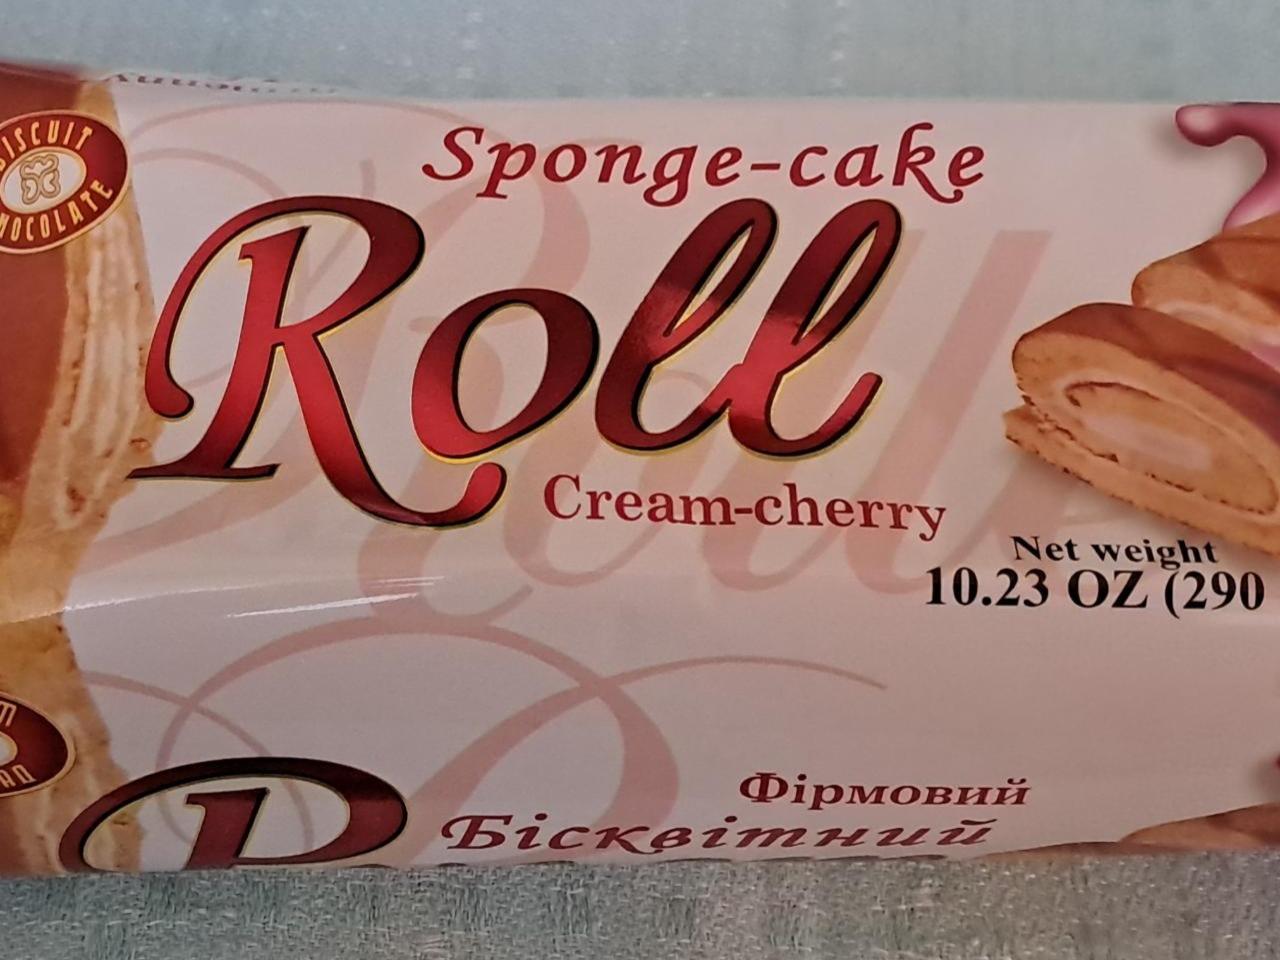 Fotografie - Sponge-cake roll cream-cherry Biscuit Chocolate